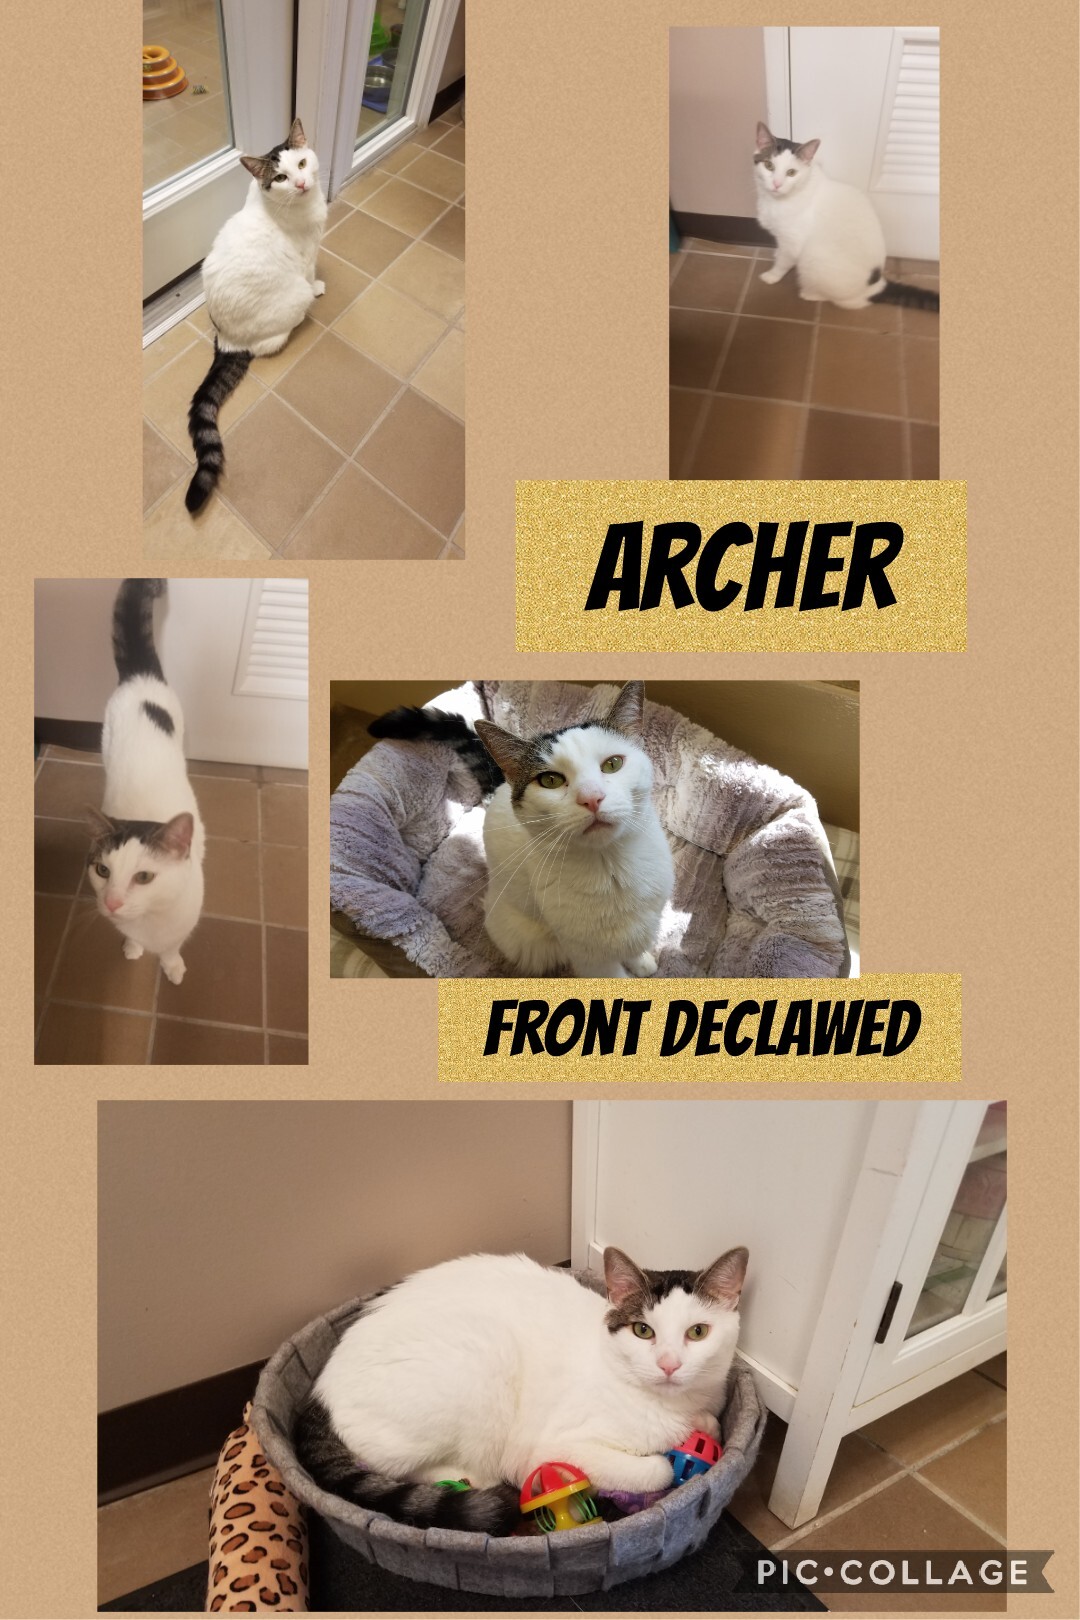 Archer detail page